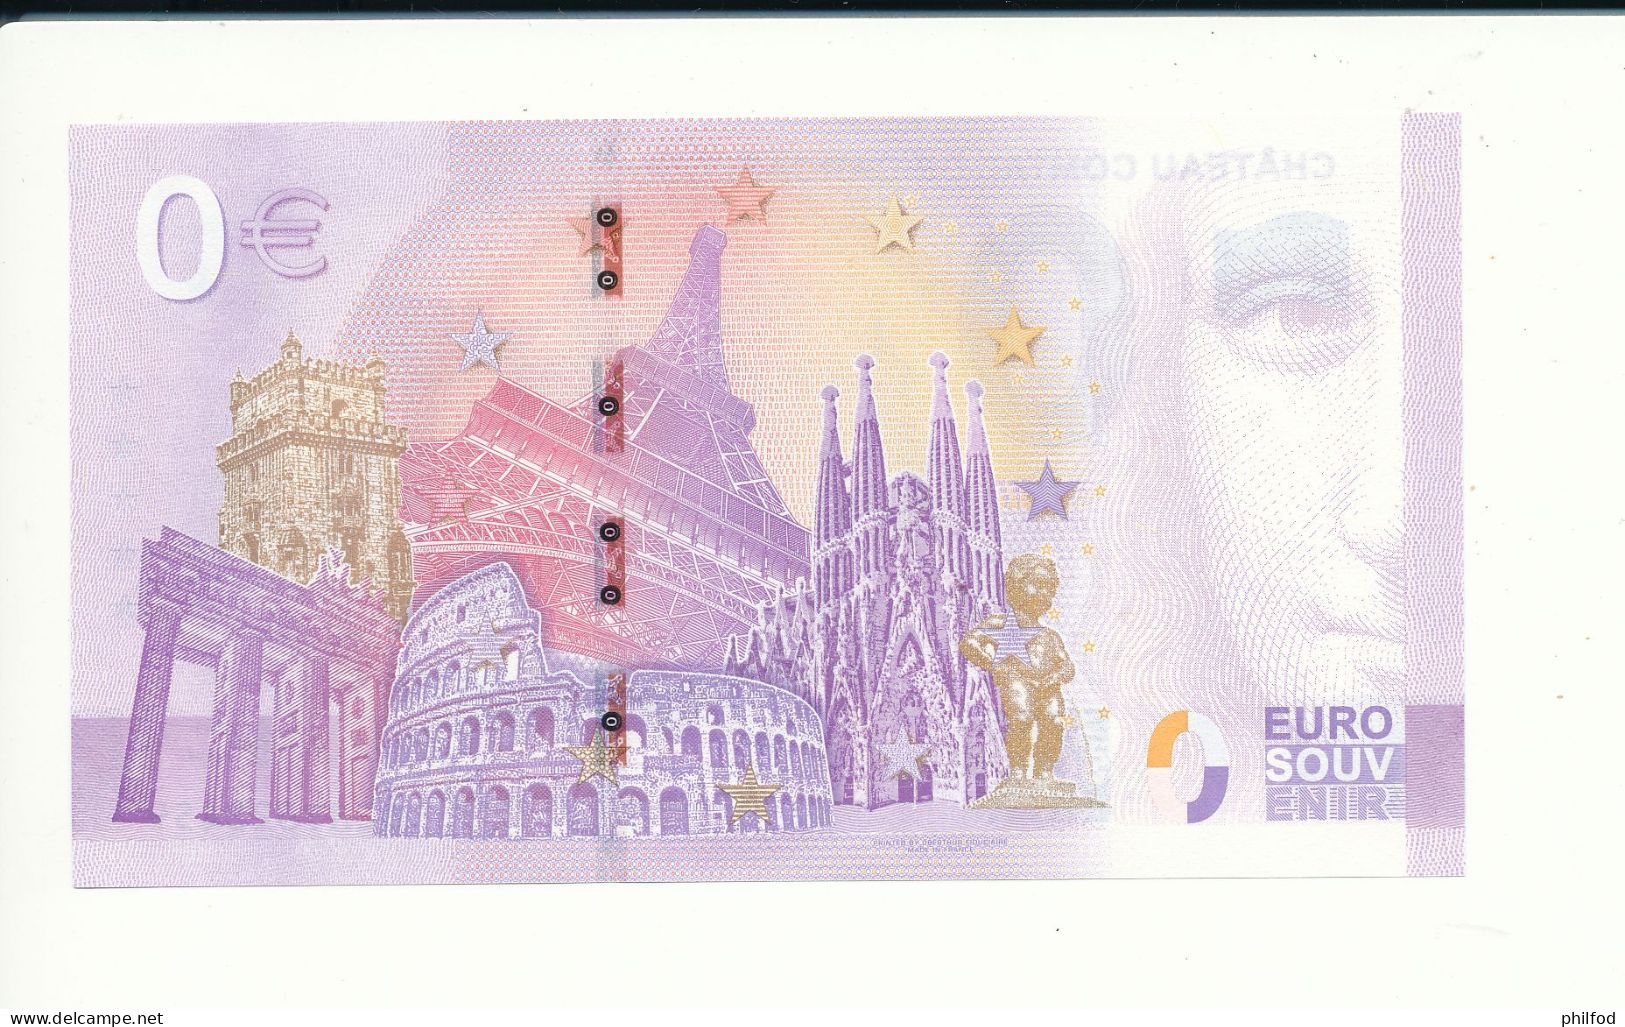 Billet Souvenir - 0 Euro - CHÂTEAU COMTAL DE CARCASSONNE - UEHY - 2023-1 - N° 28459 - Kilowaar - Bankbiljetten